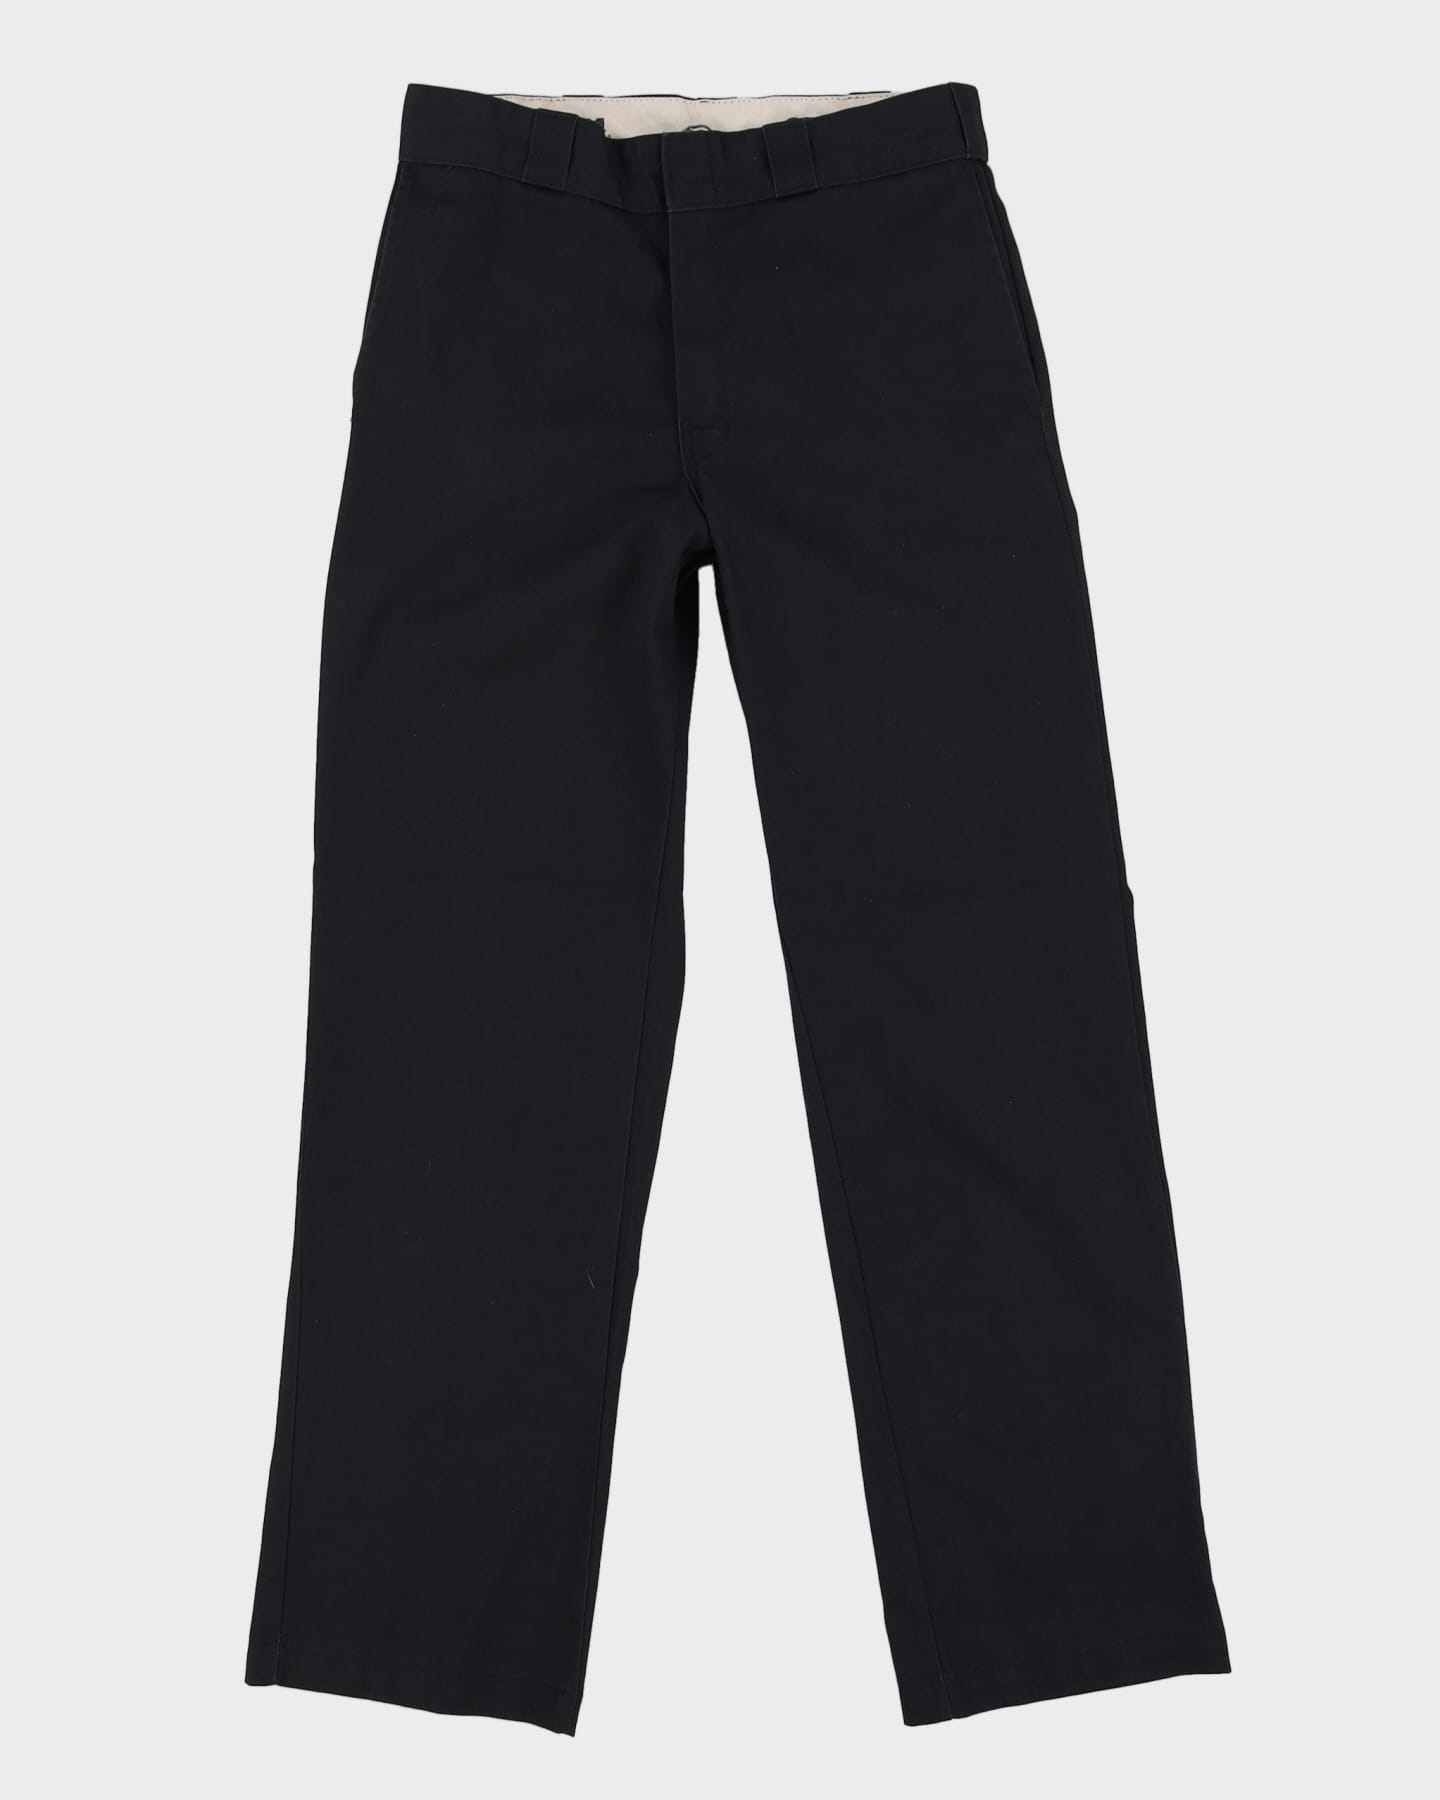 Dickies 874 Black Work Pant / Trousers - W32 L32